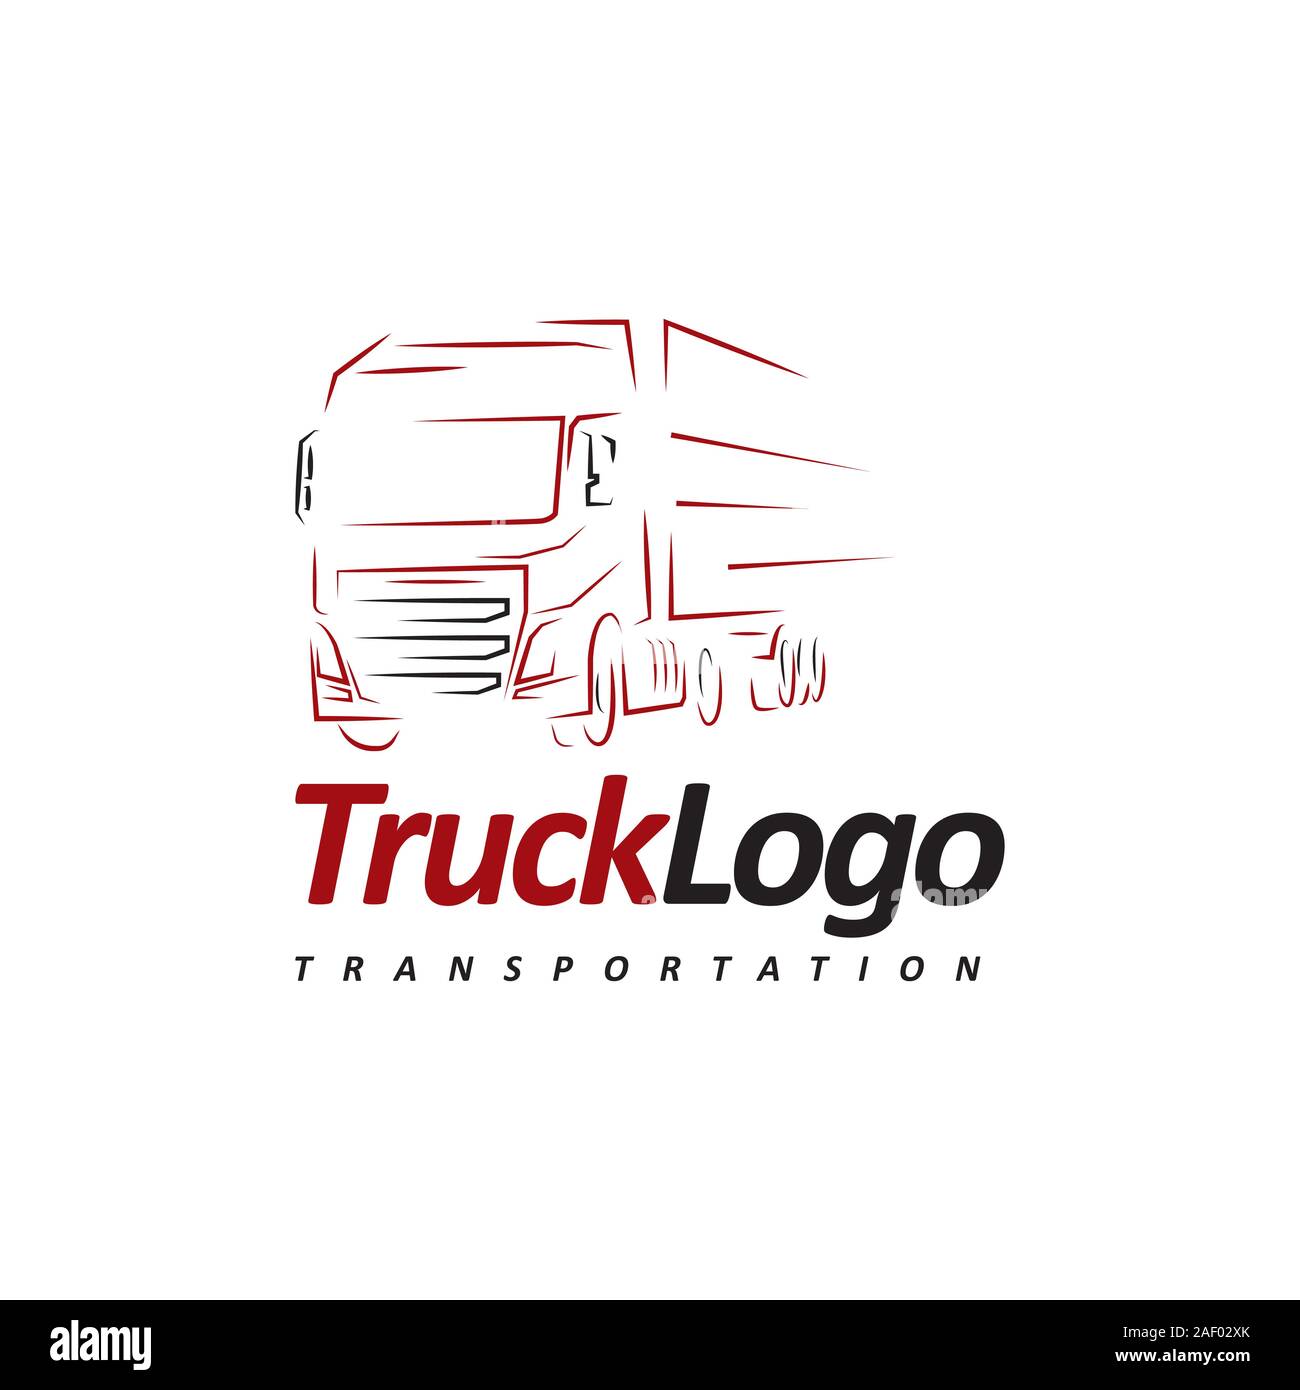 food truck logo design